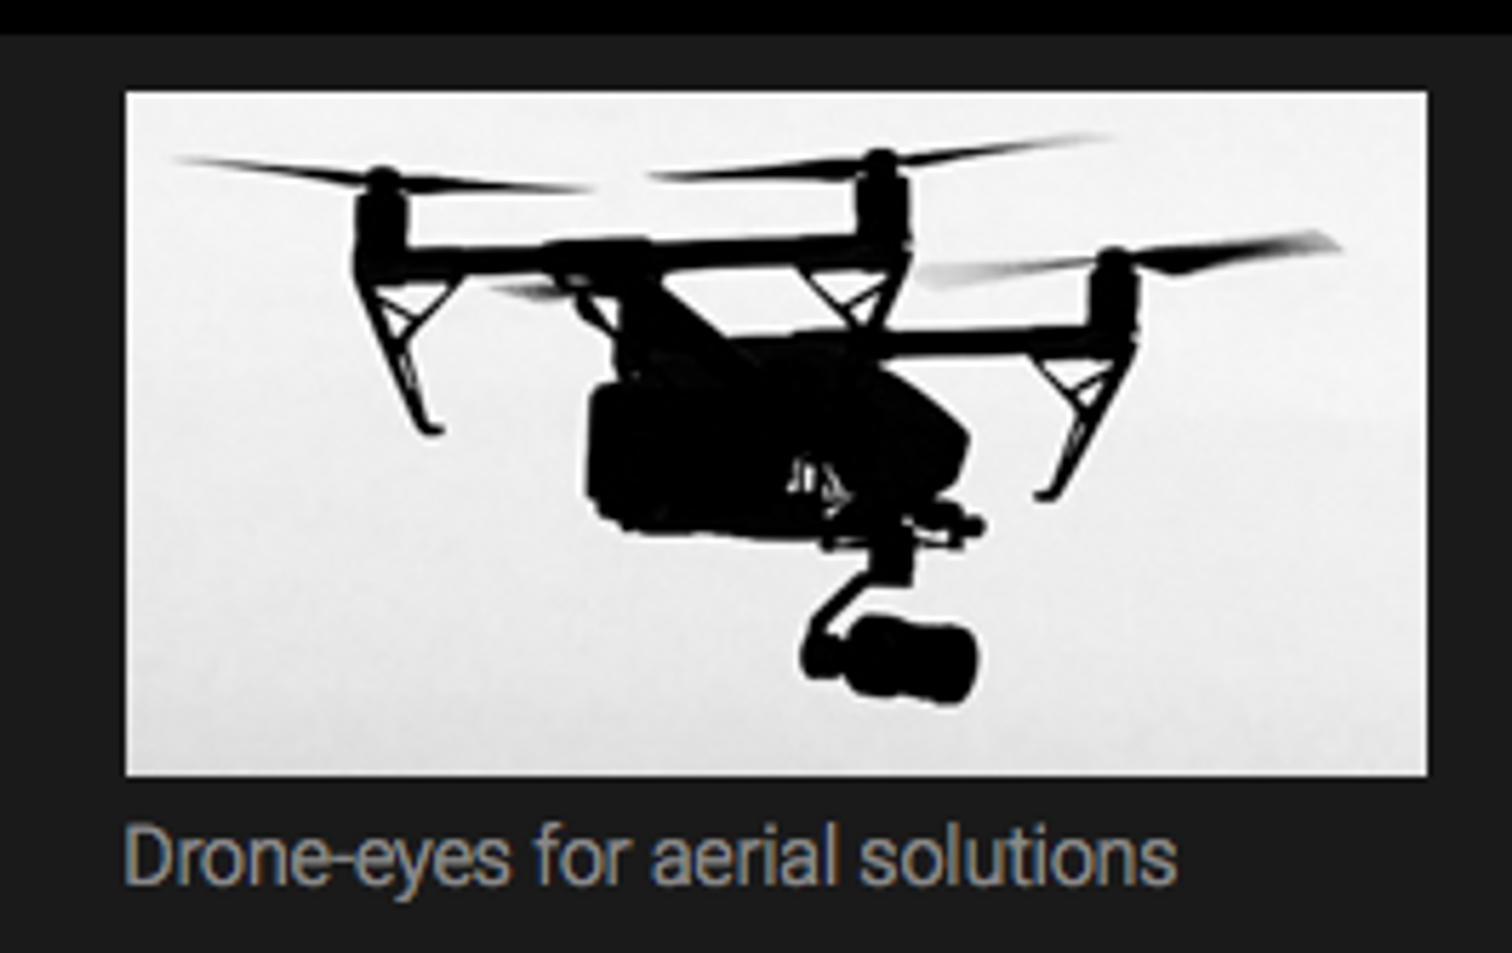 eeGeMa - Aerial solutions - Drone-eyes logo